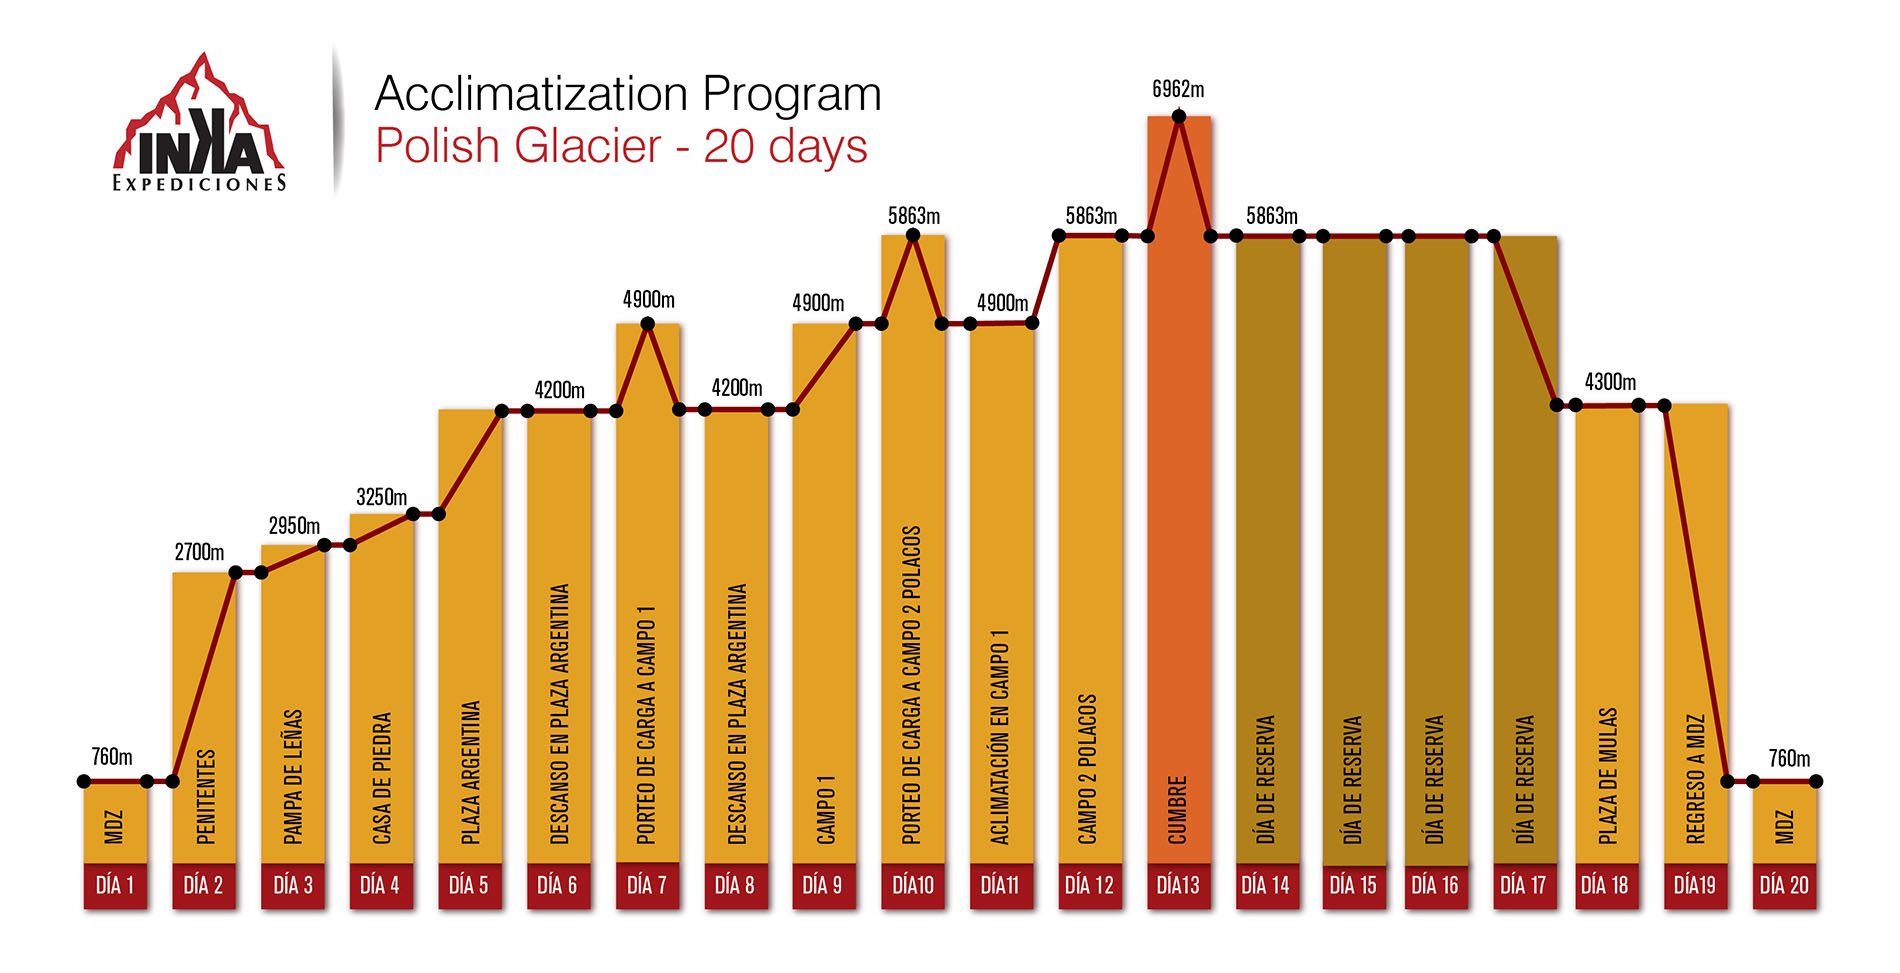 Acclimatization Program Polish Glacier